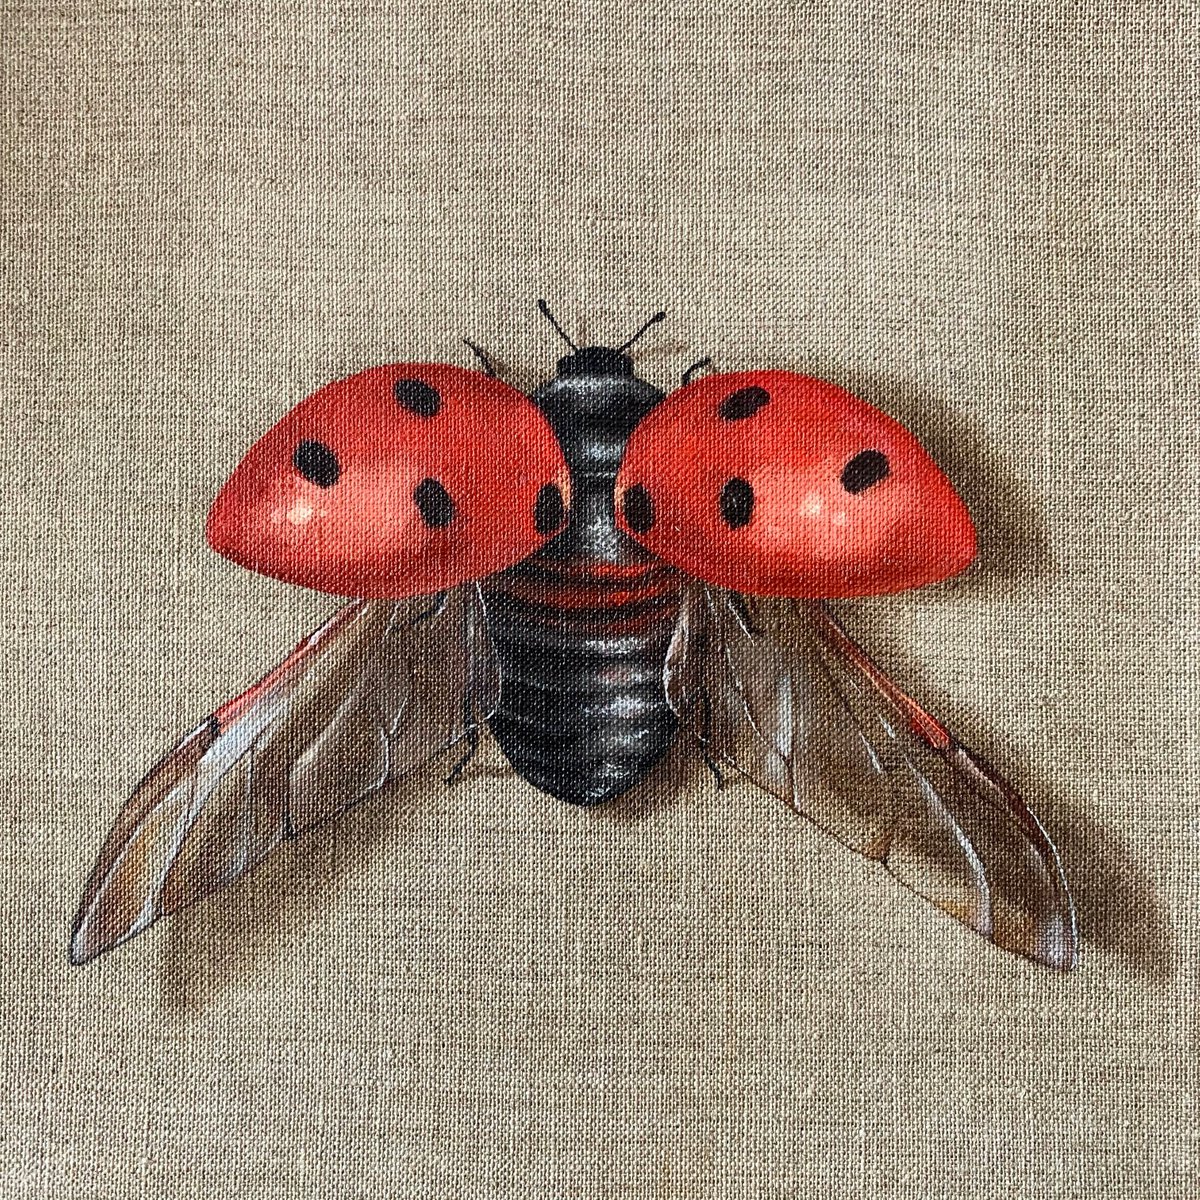  - Impermanent life - � #3 Ladybug by Alina Marsovna